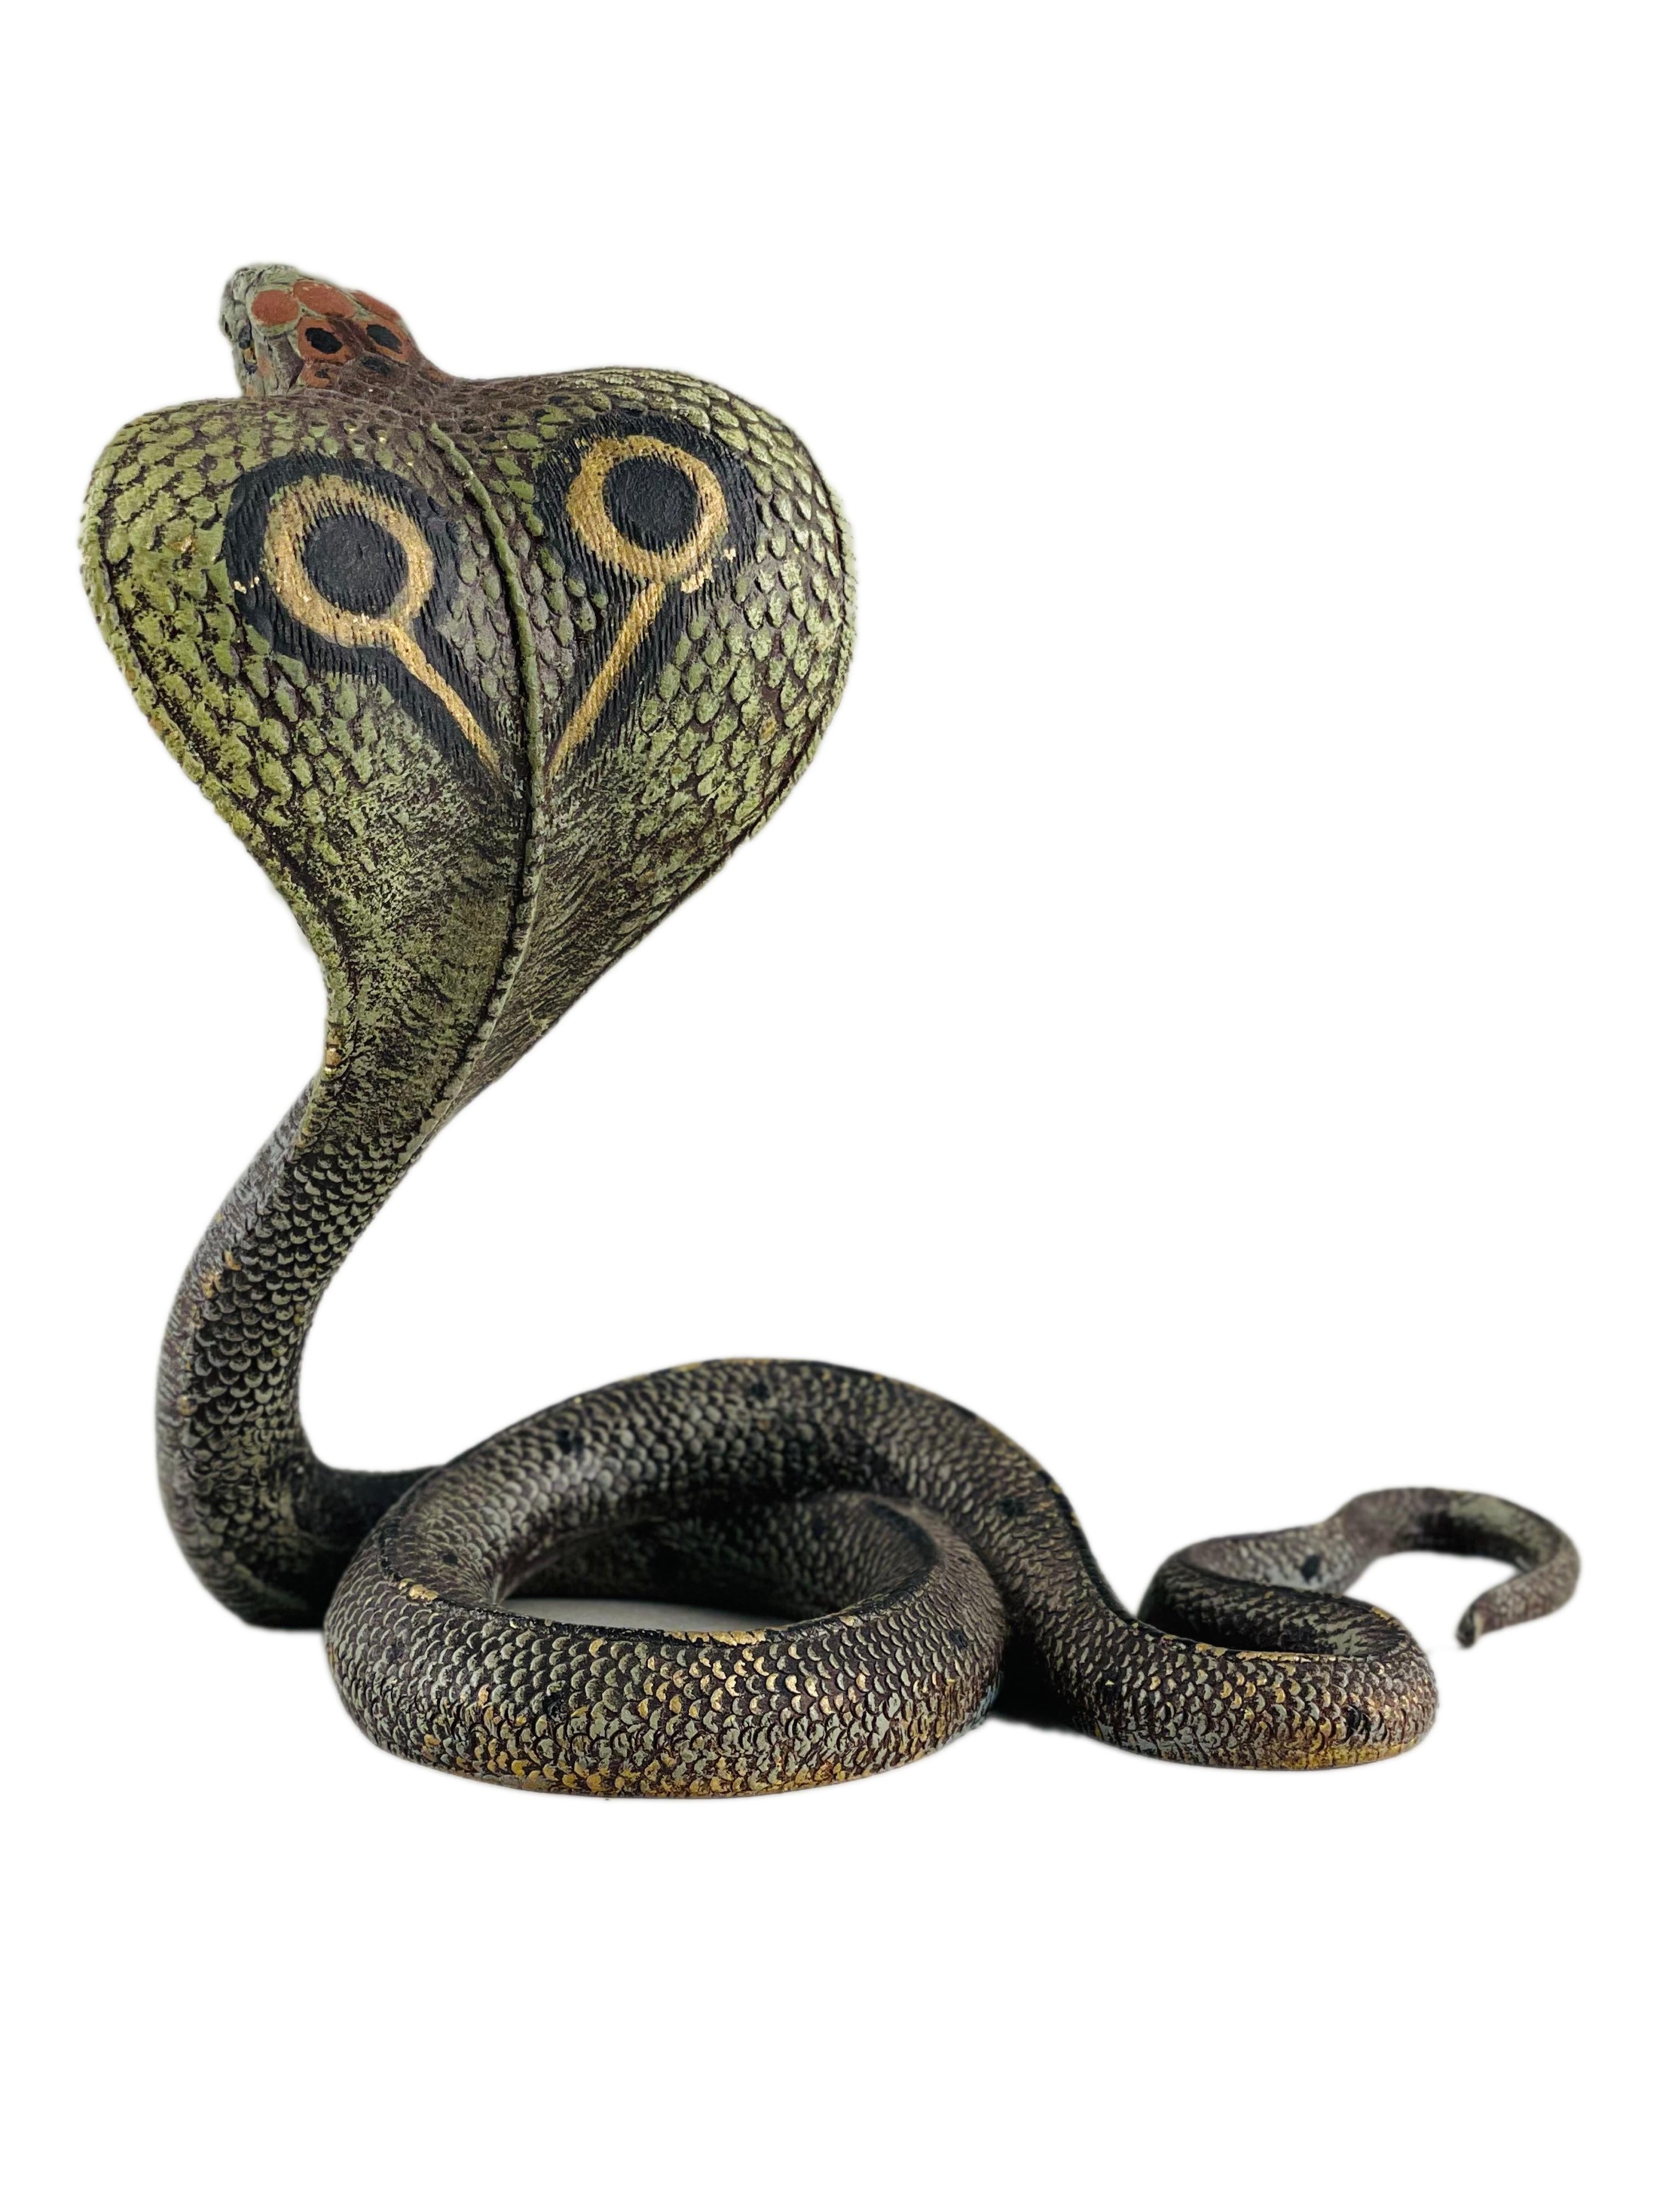 austrian cobra